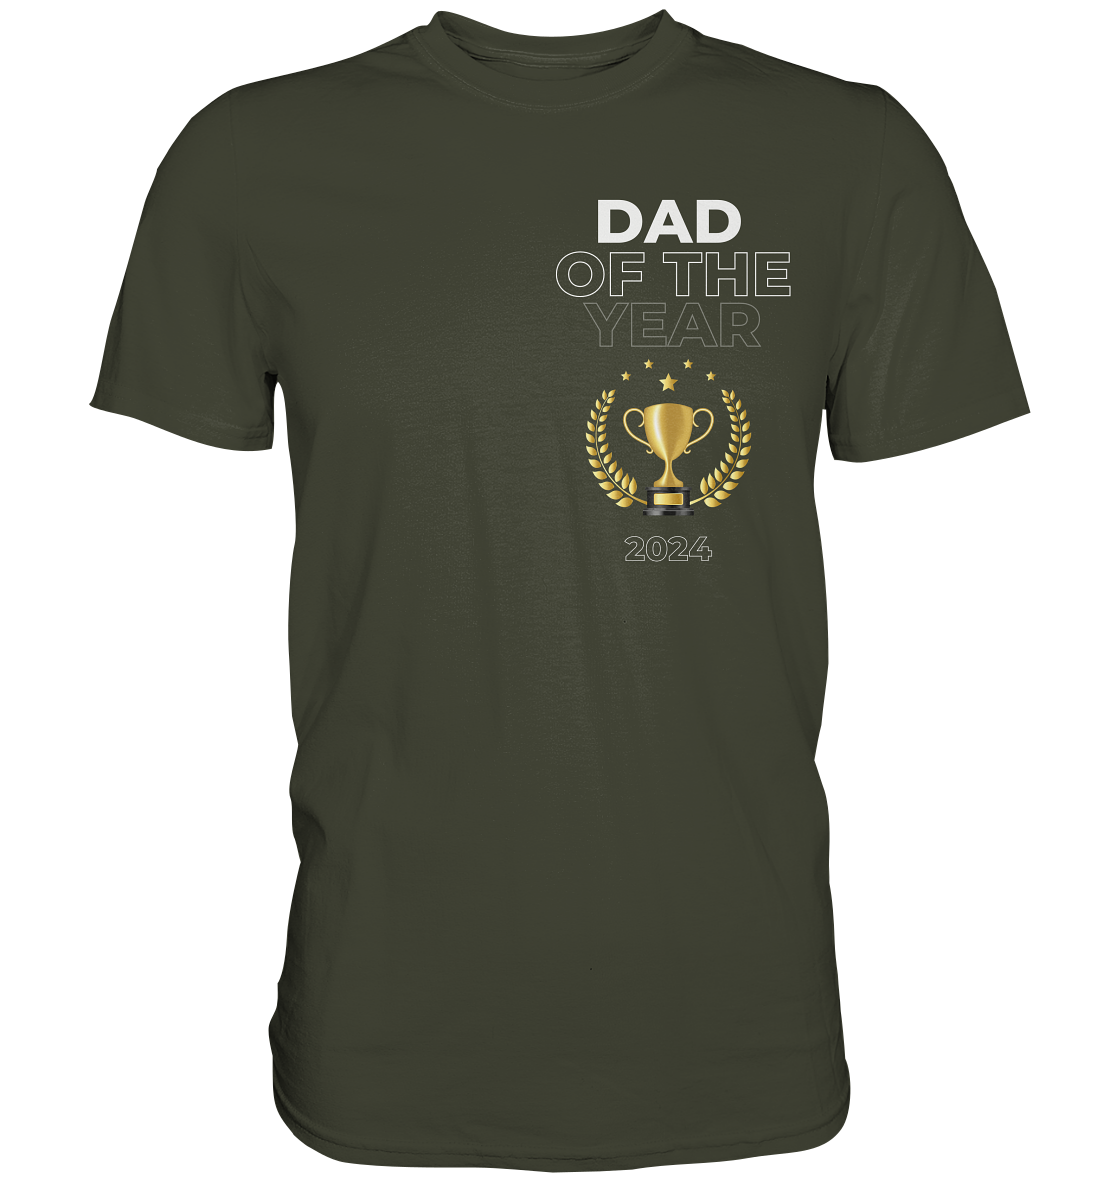 DAD of the Year, Datum personalisierbar - Premium Shirt